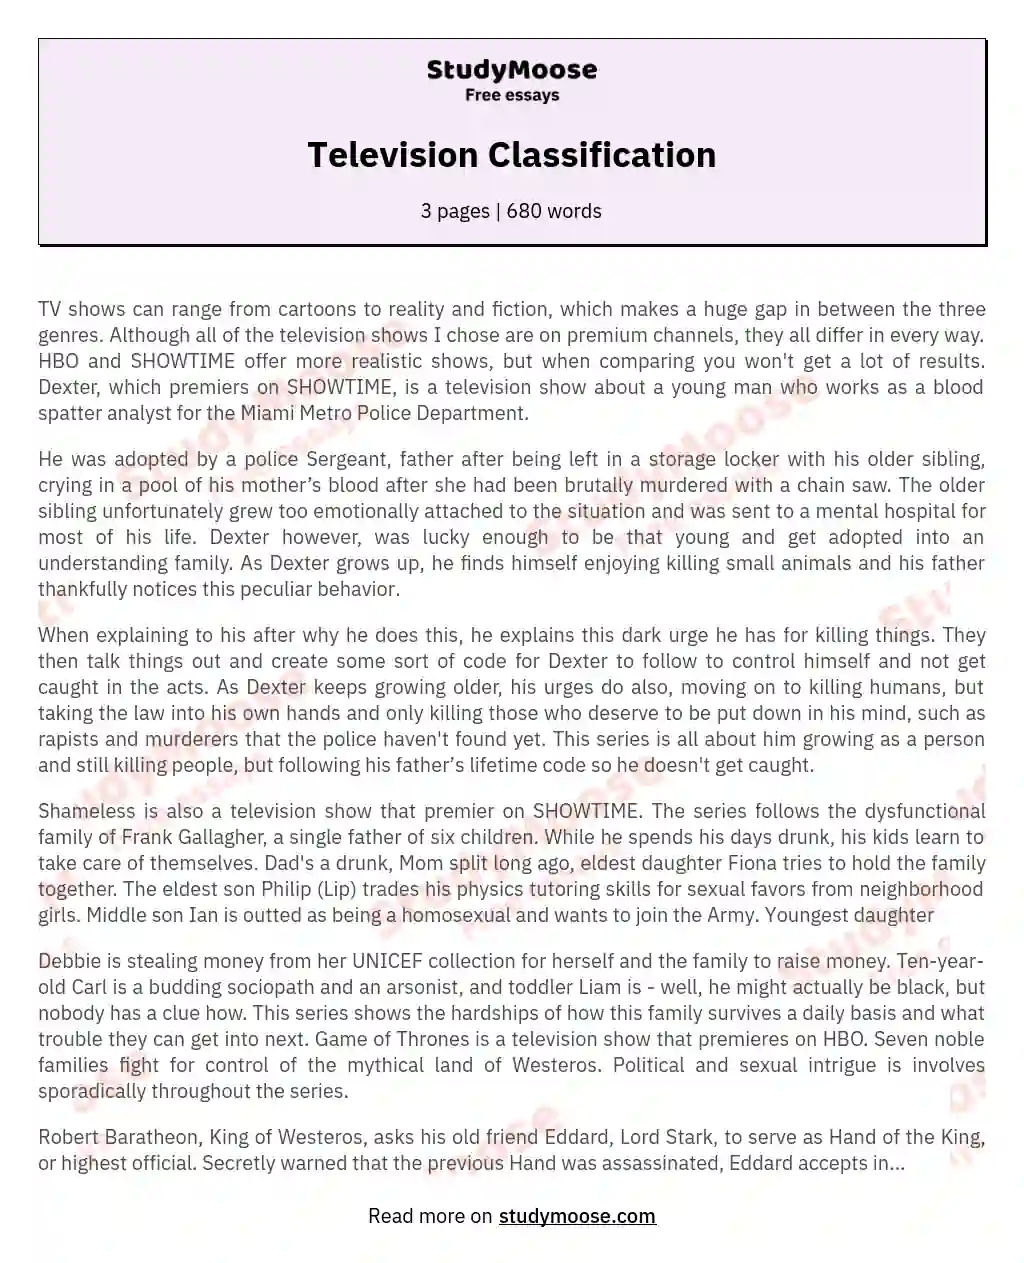 Television Classification essay